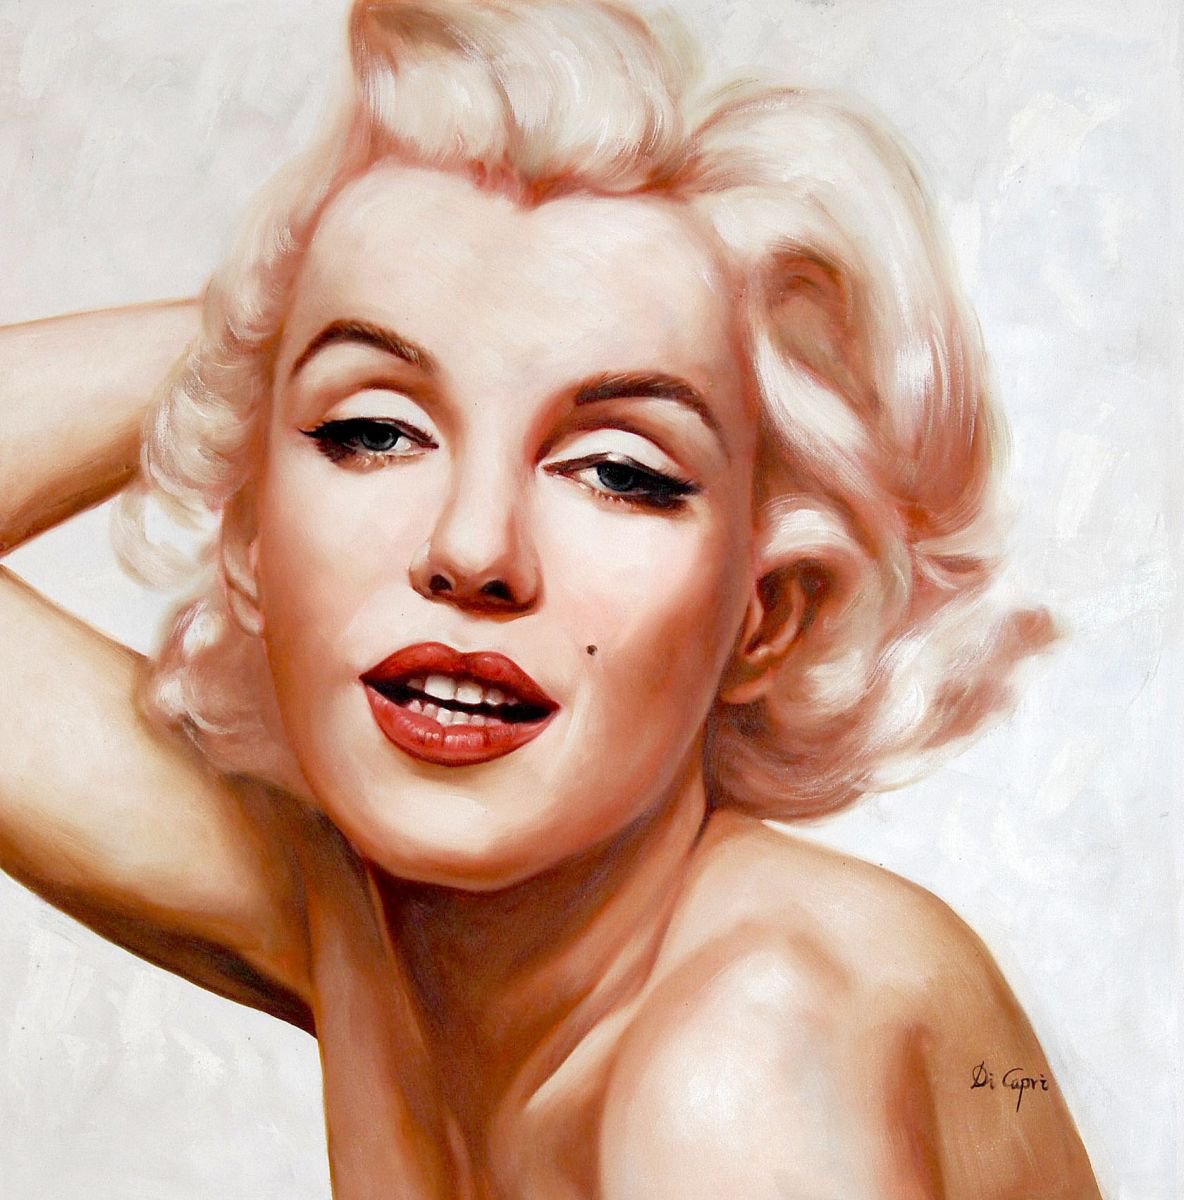 Marilyn Monroe Portrait - The Last Sitting - � By: Bert Stern by Di Capri